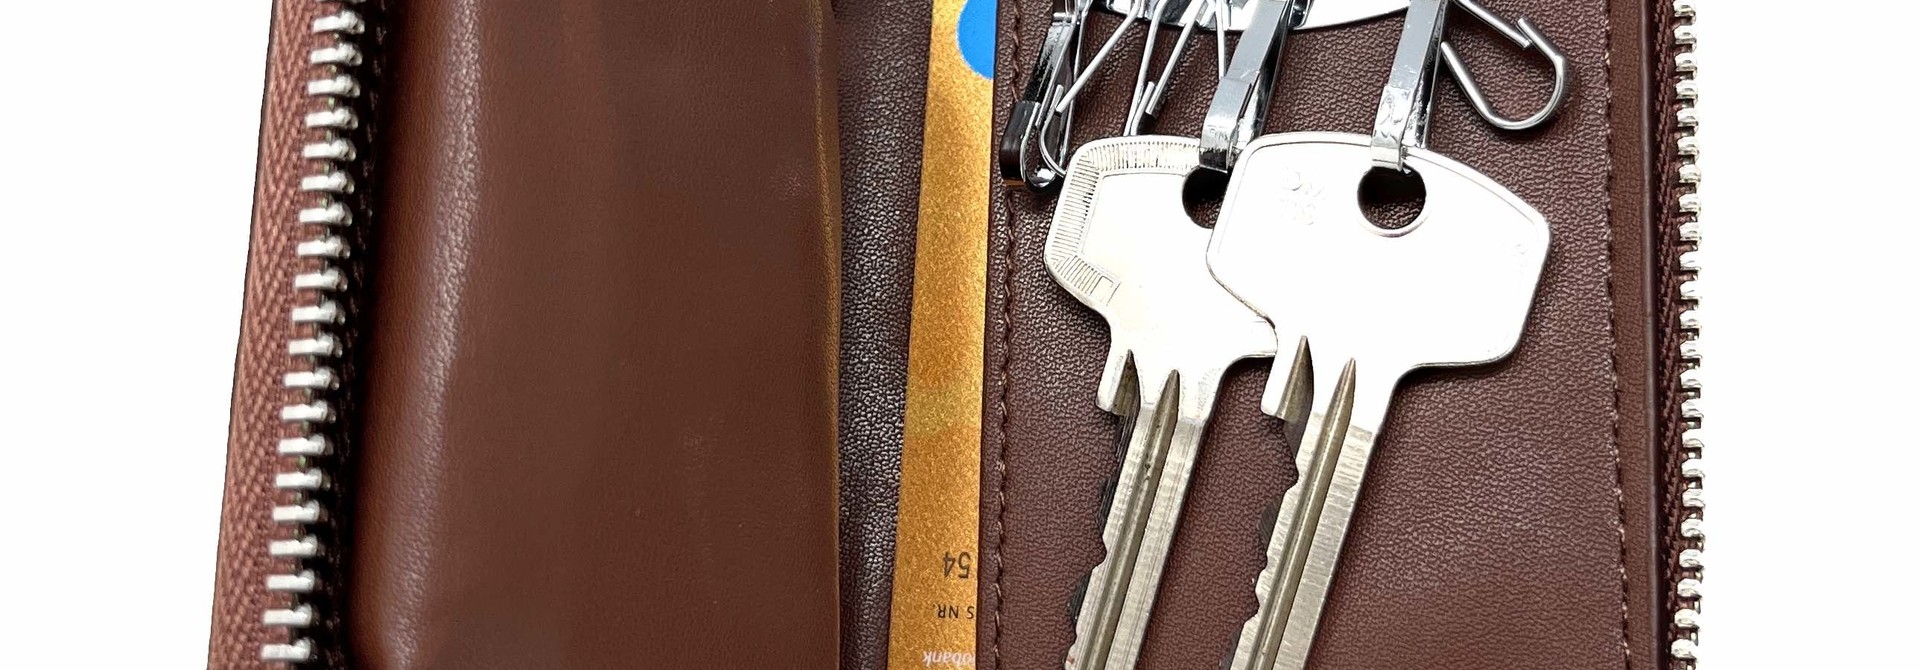 Leather Key Case, 6 Key Hooks, Card Holder, Bank Notes Wallet, Car Key Pocket, Multifunctional Key Organizer - Brown